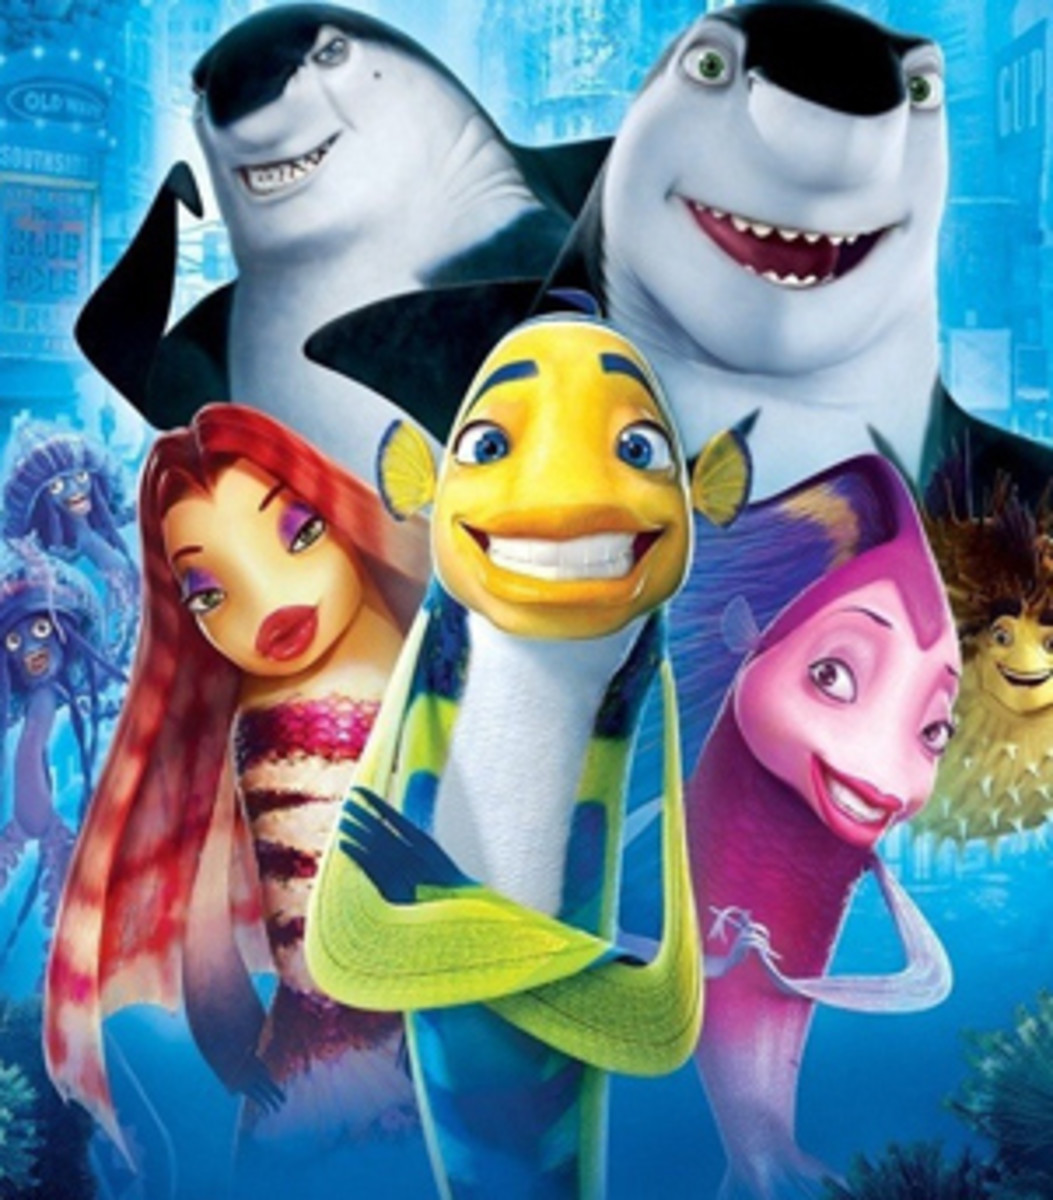 The cast of Shark Tale